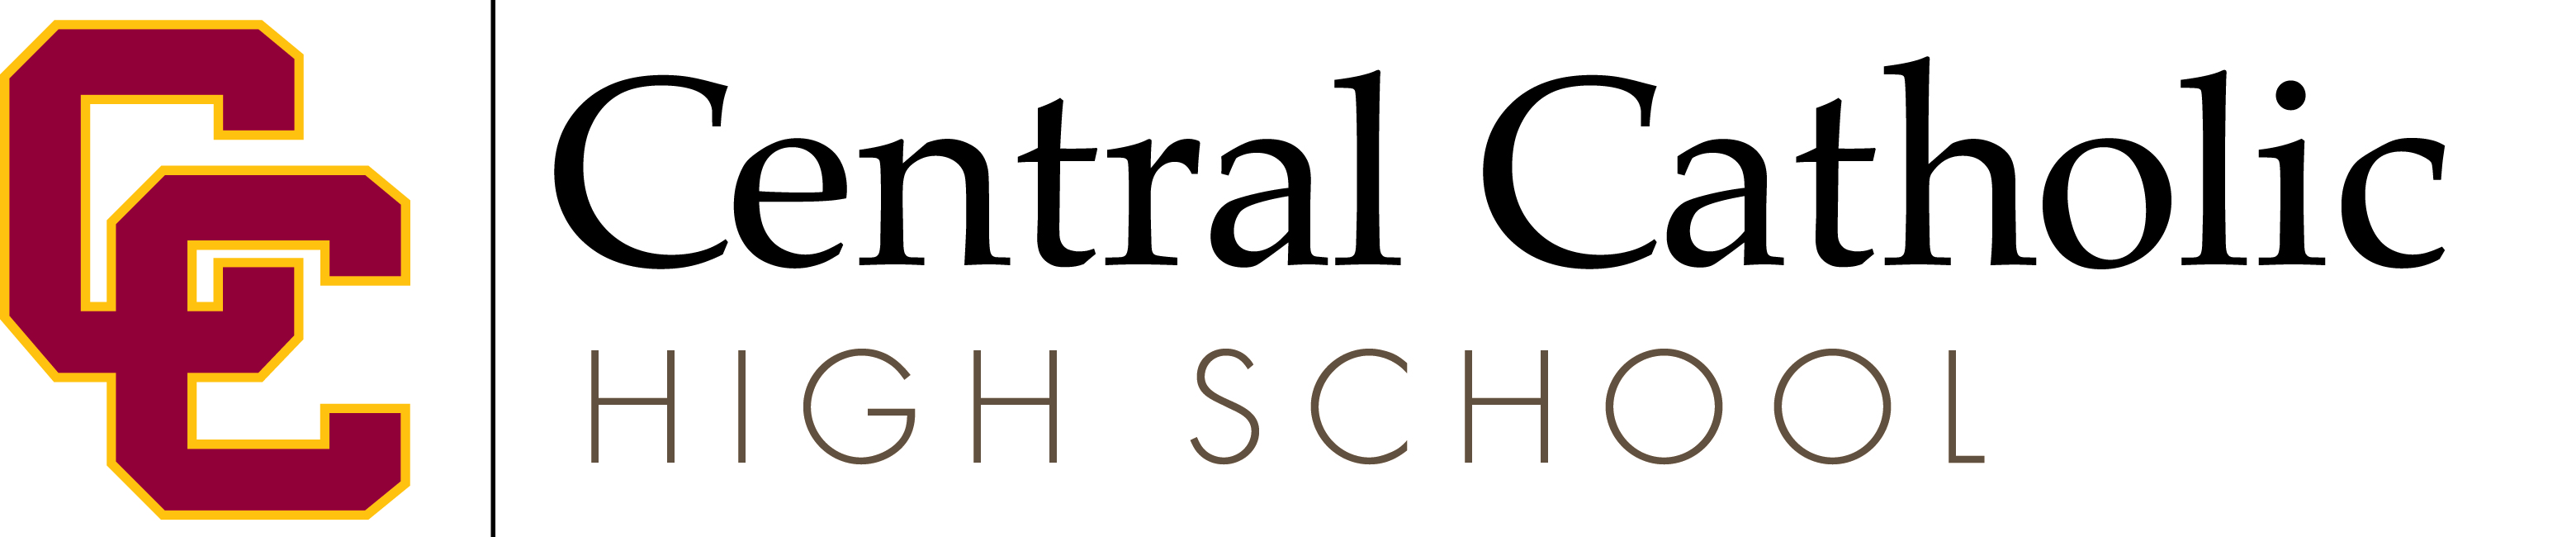 Central Catholic High School (OR)